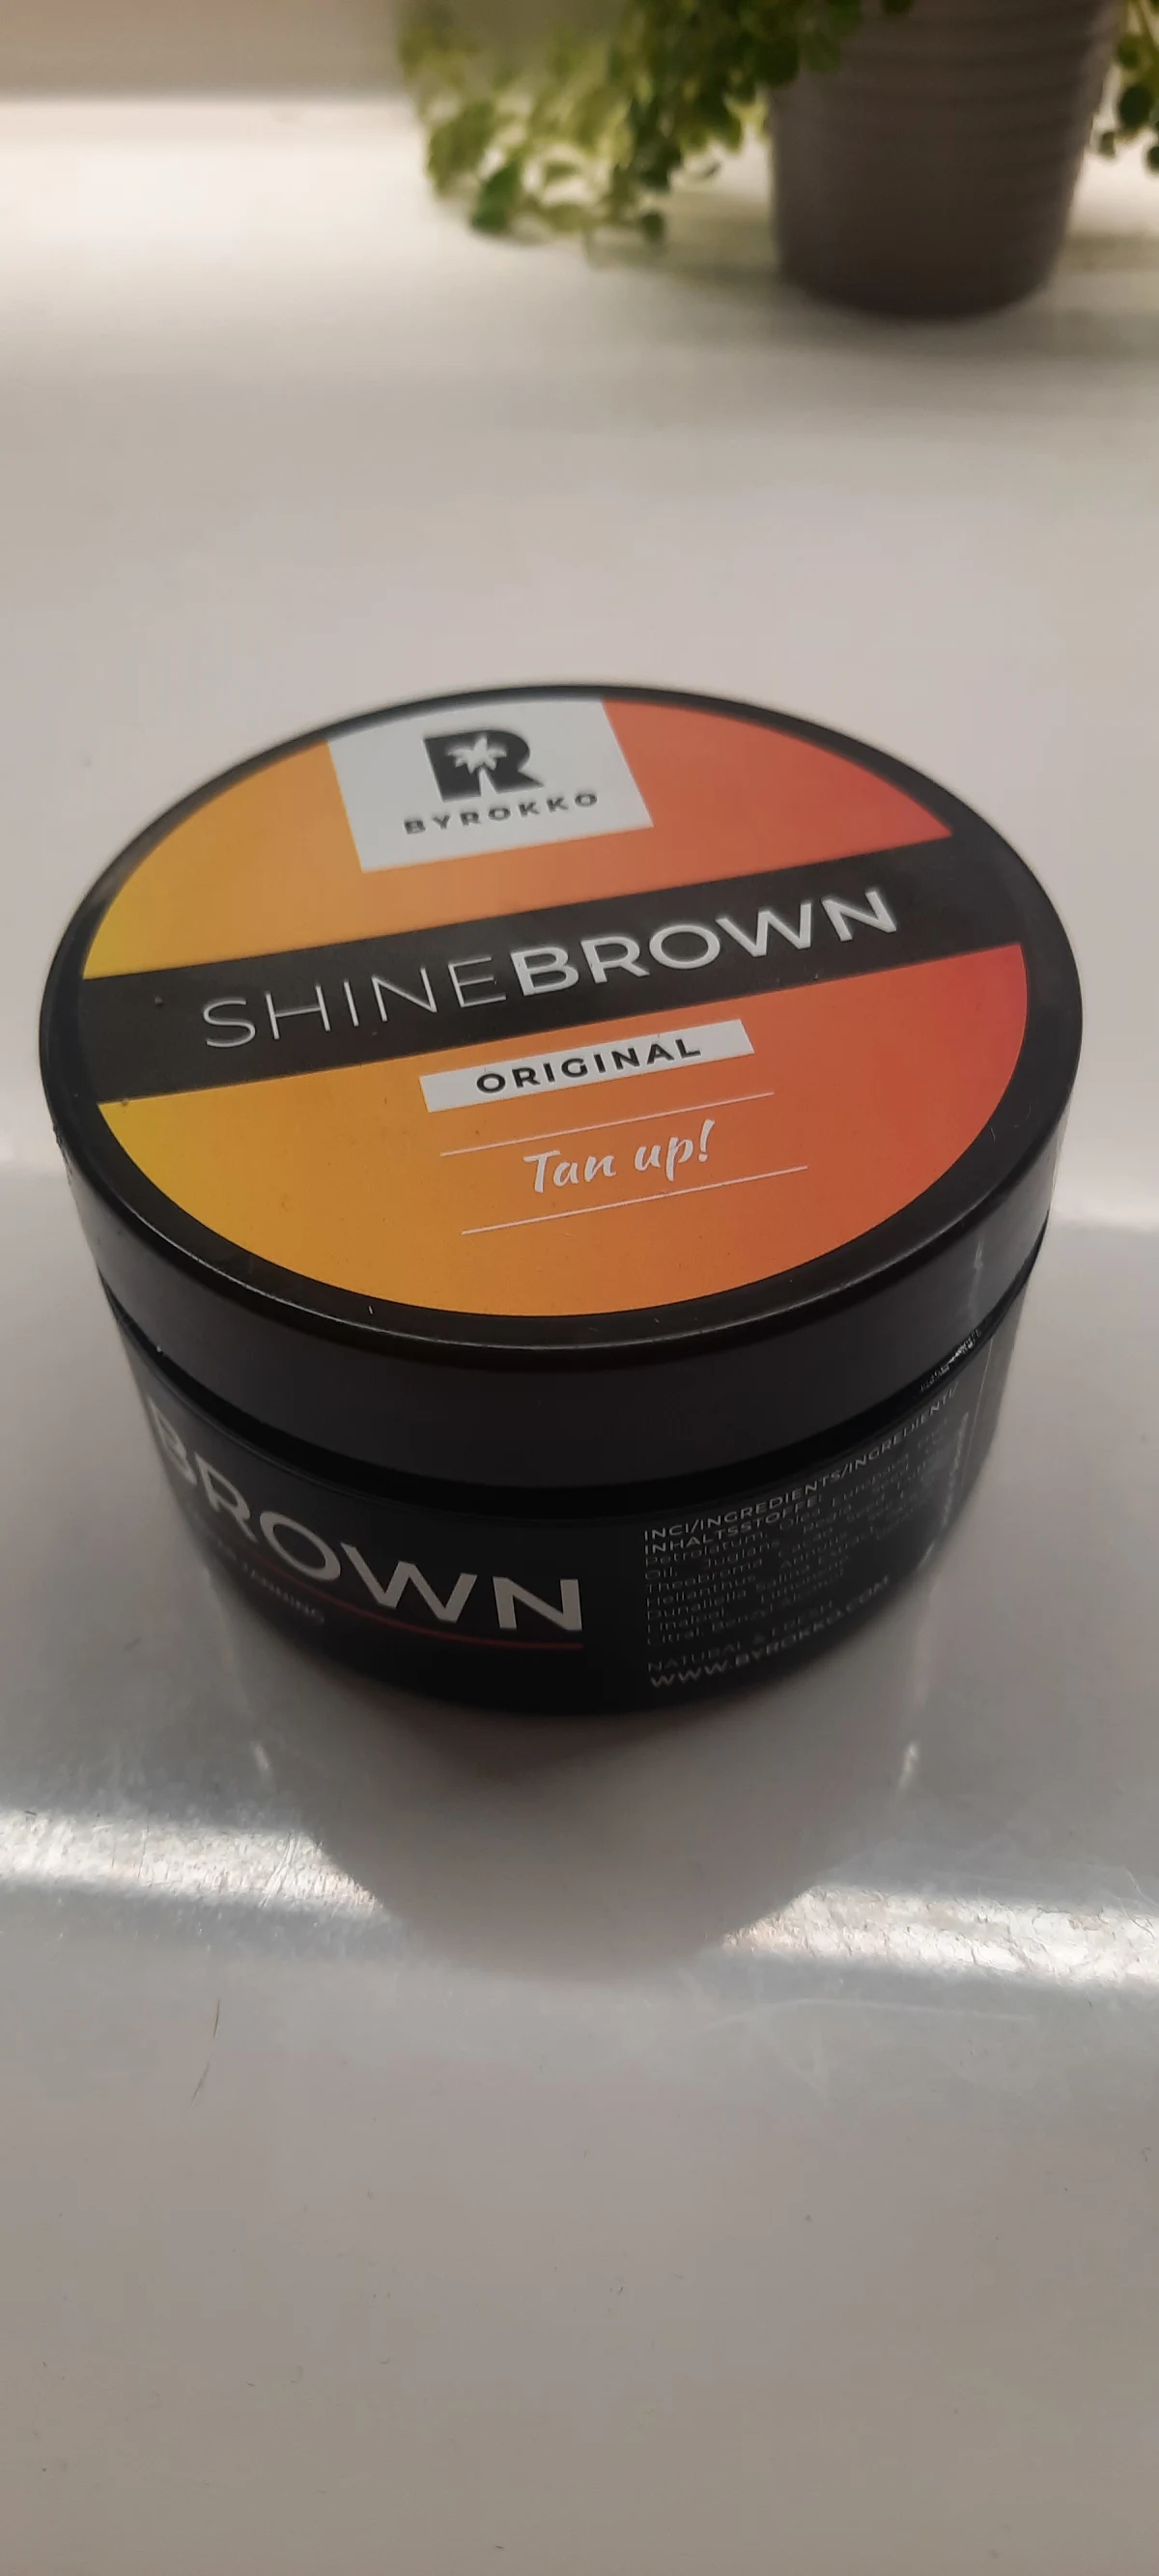 Shine Brown Premium Tanning Cream - review image